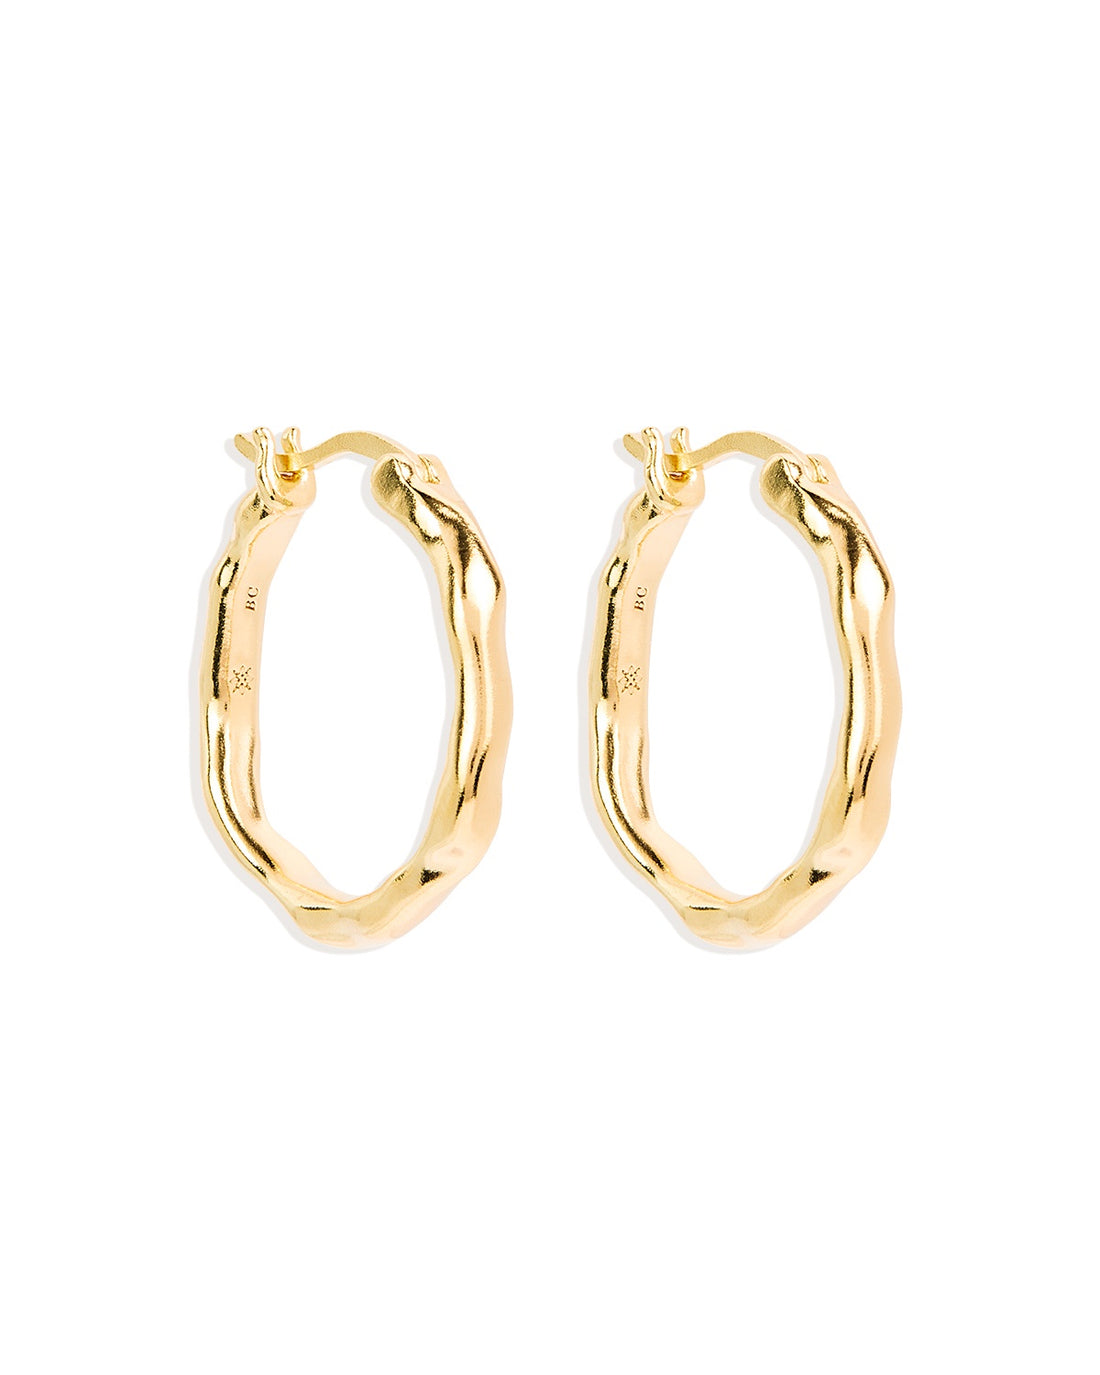 Gold Lover Hoops Earrings by By Charlotte - Prae Store